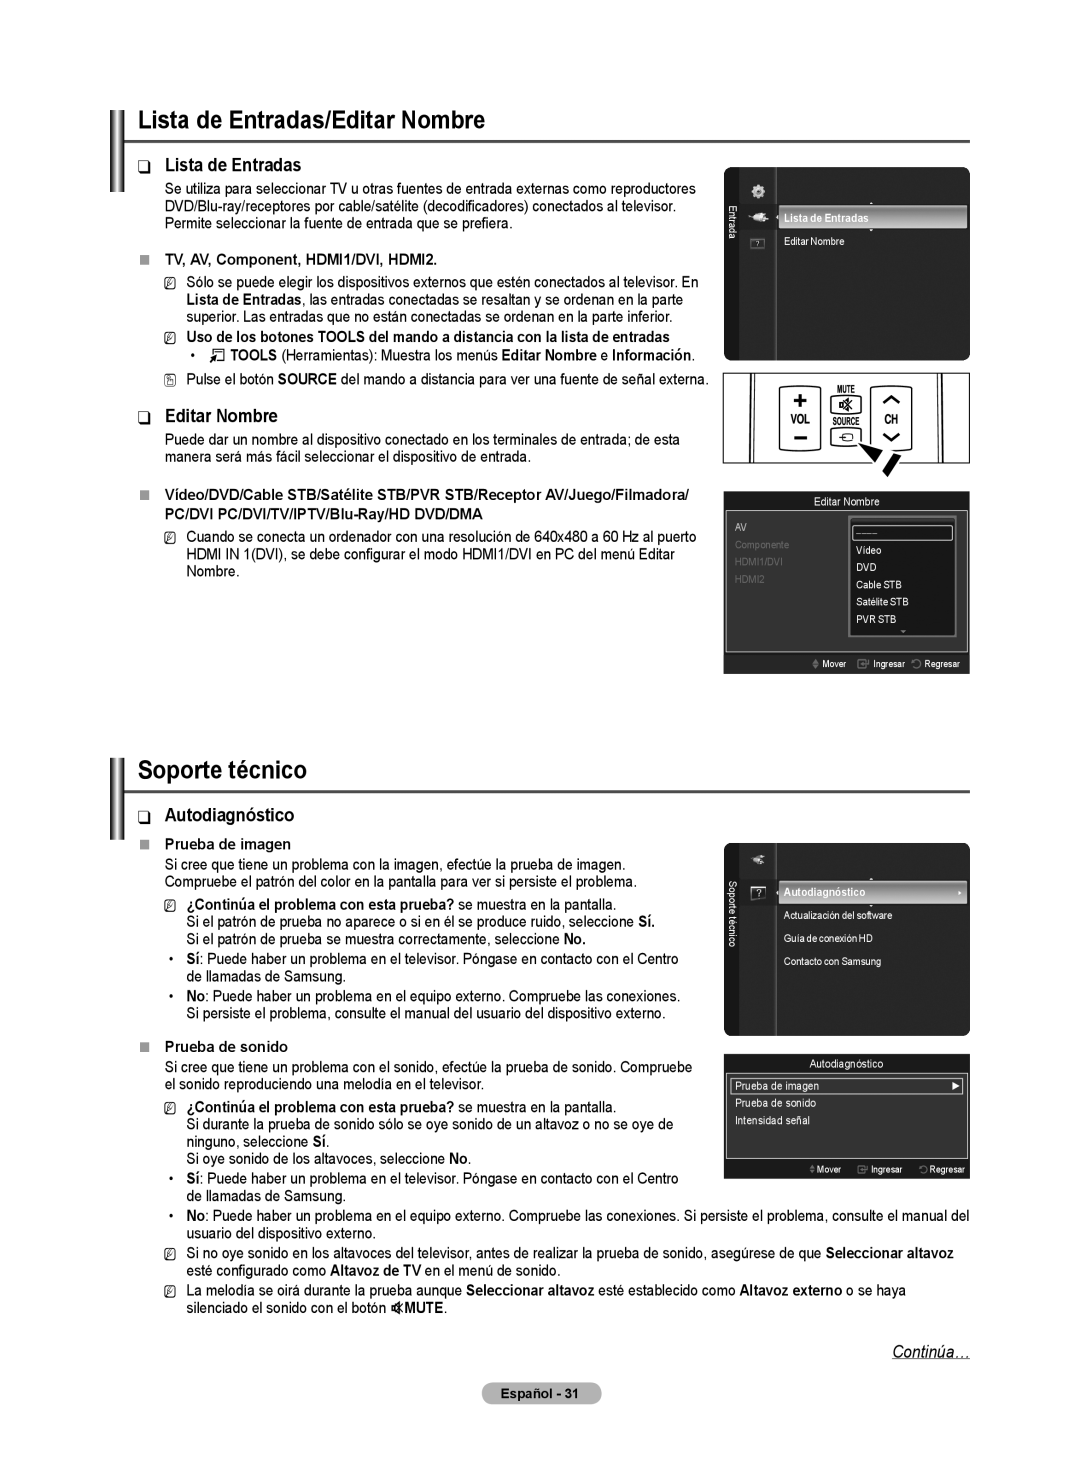 Samsung BN68-02426A-00 user manual Lista de Entradas, Editar Nombre, Autodiagnóstico, Continúa…, „„ Prueba de imagen 